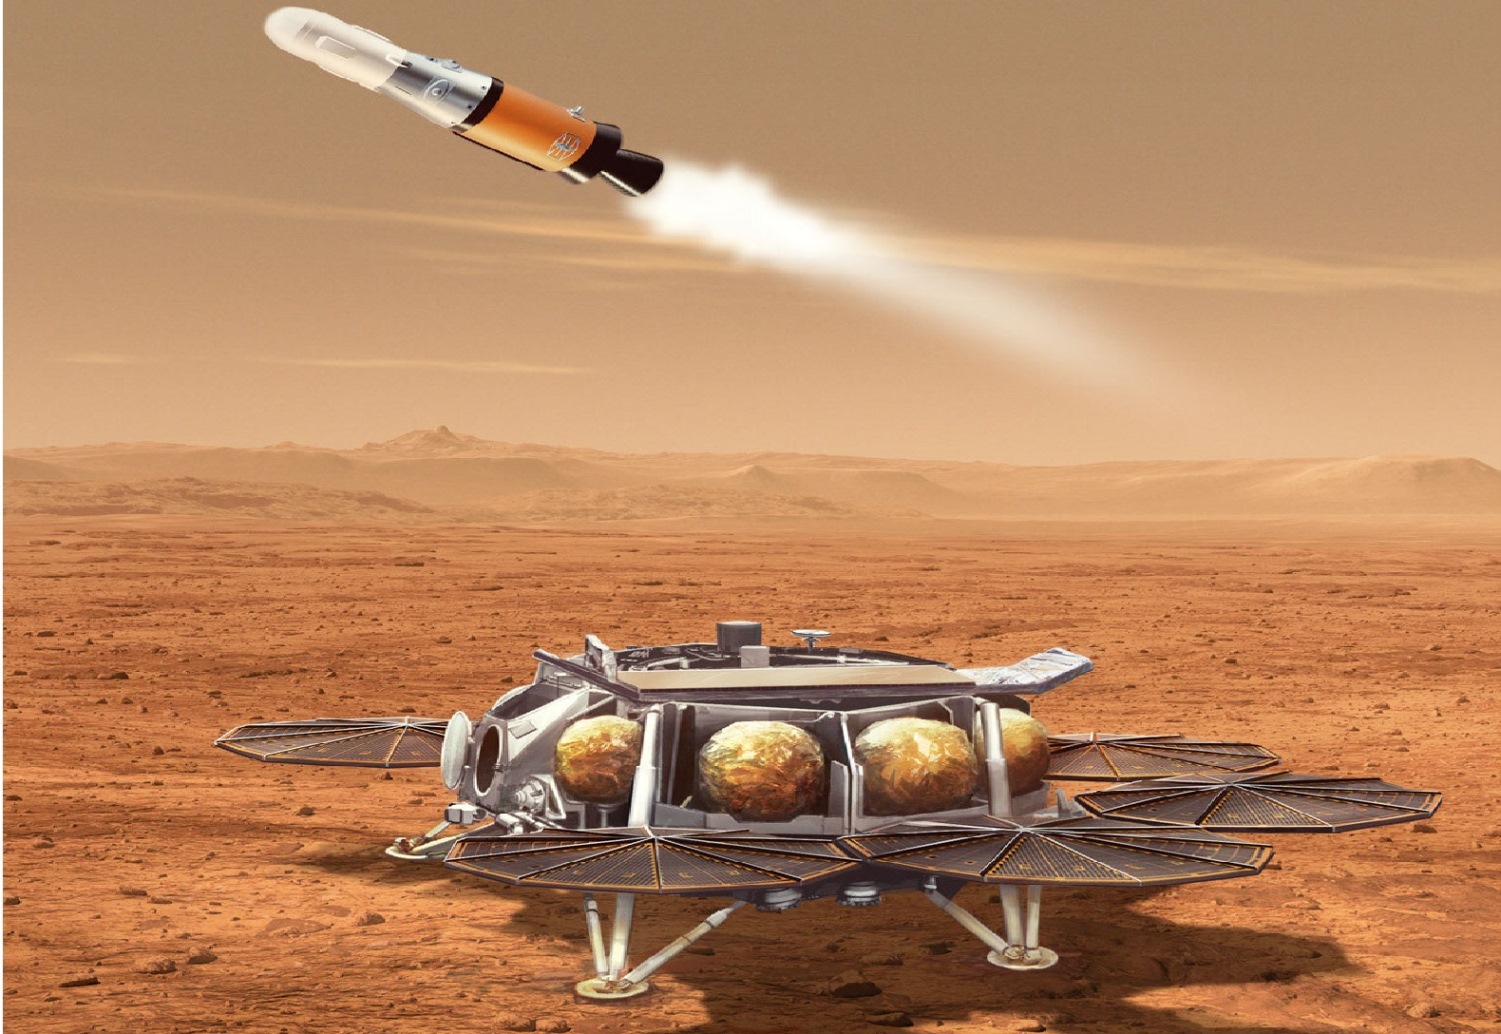 Lander za povrat uzoraka s Marsa i Vozilo za uspon na Marsu (MAV). Izvor: NASA/JPL-Caltech.